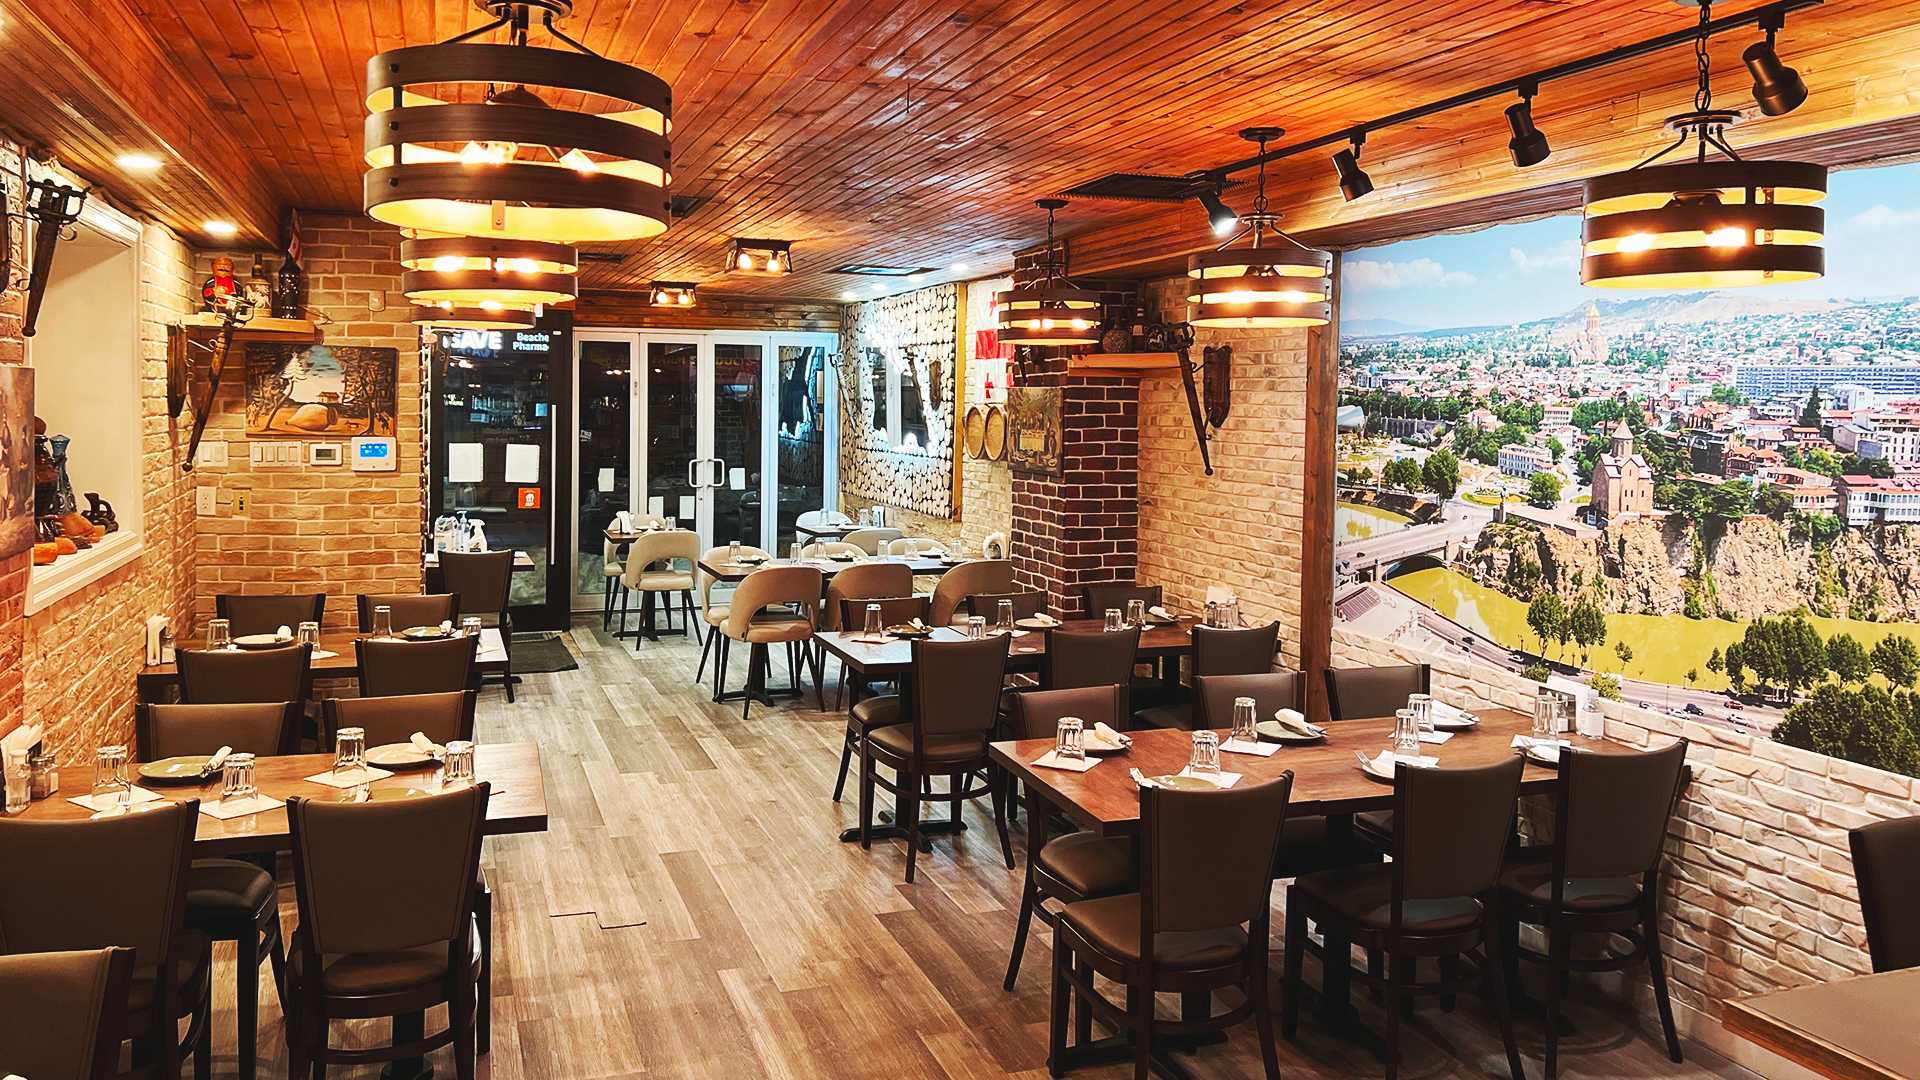 Inside Tiflisi restaurant in the Beaches